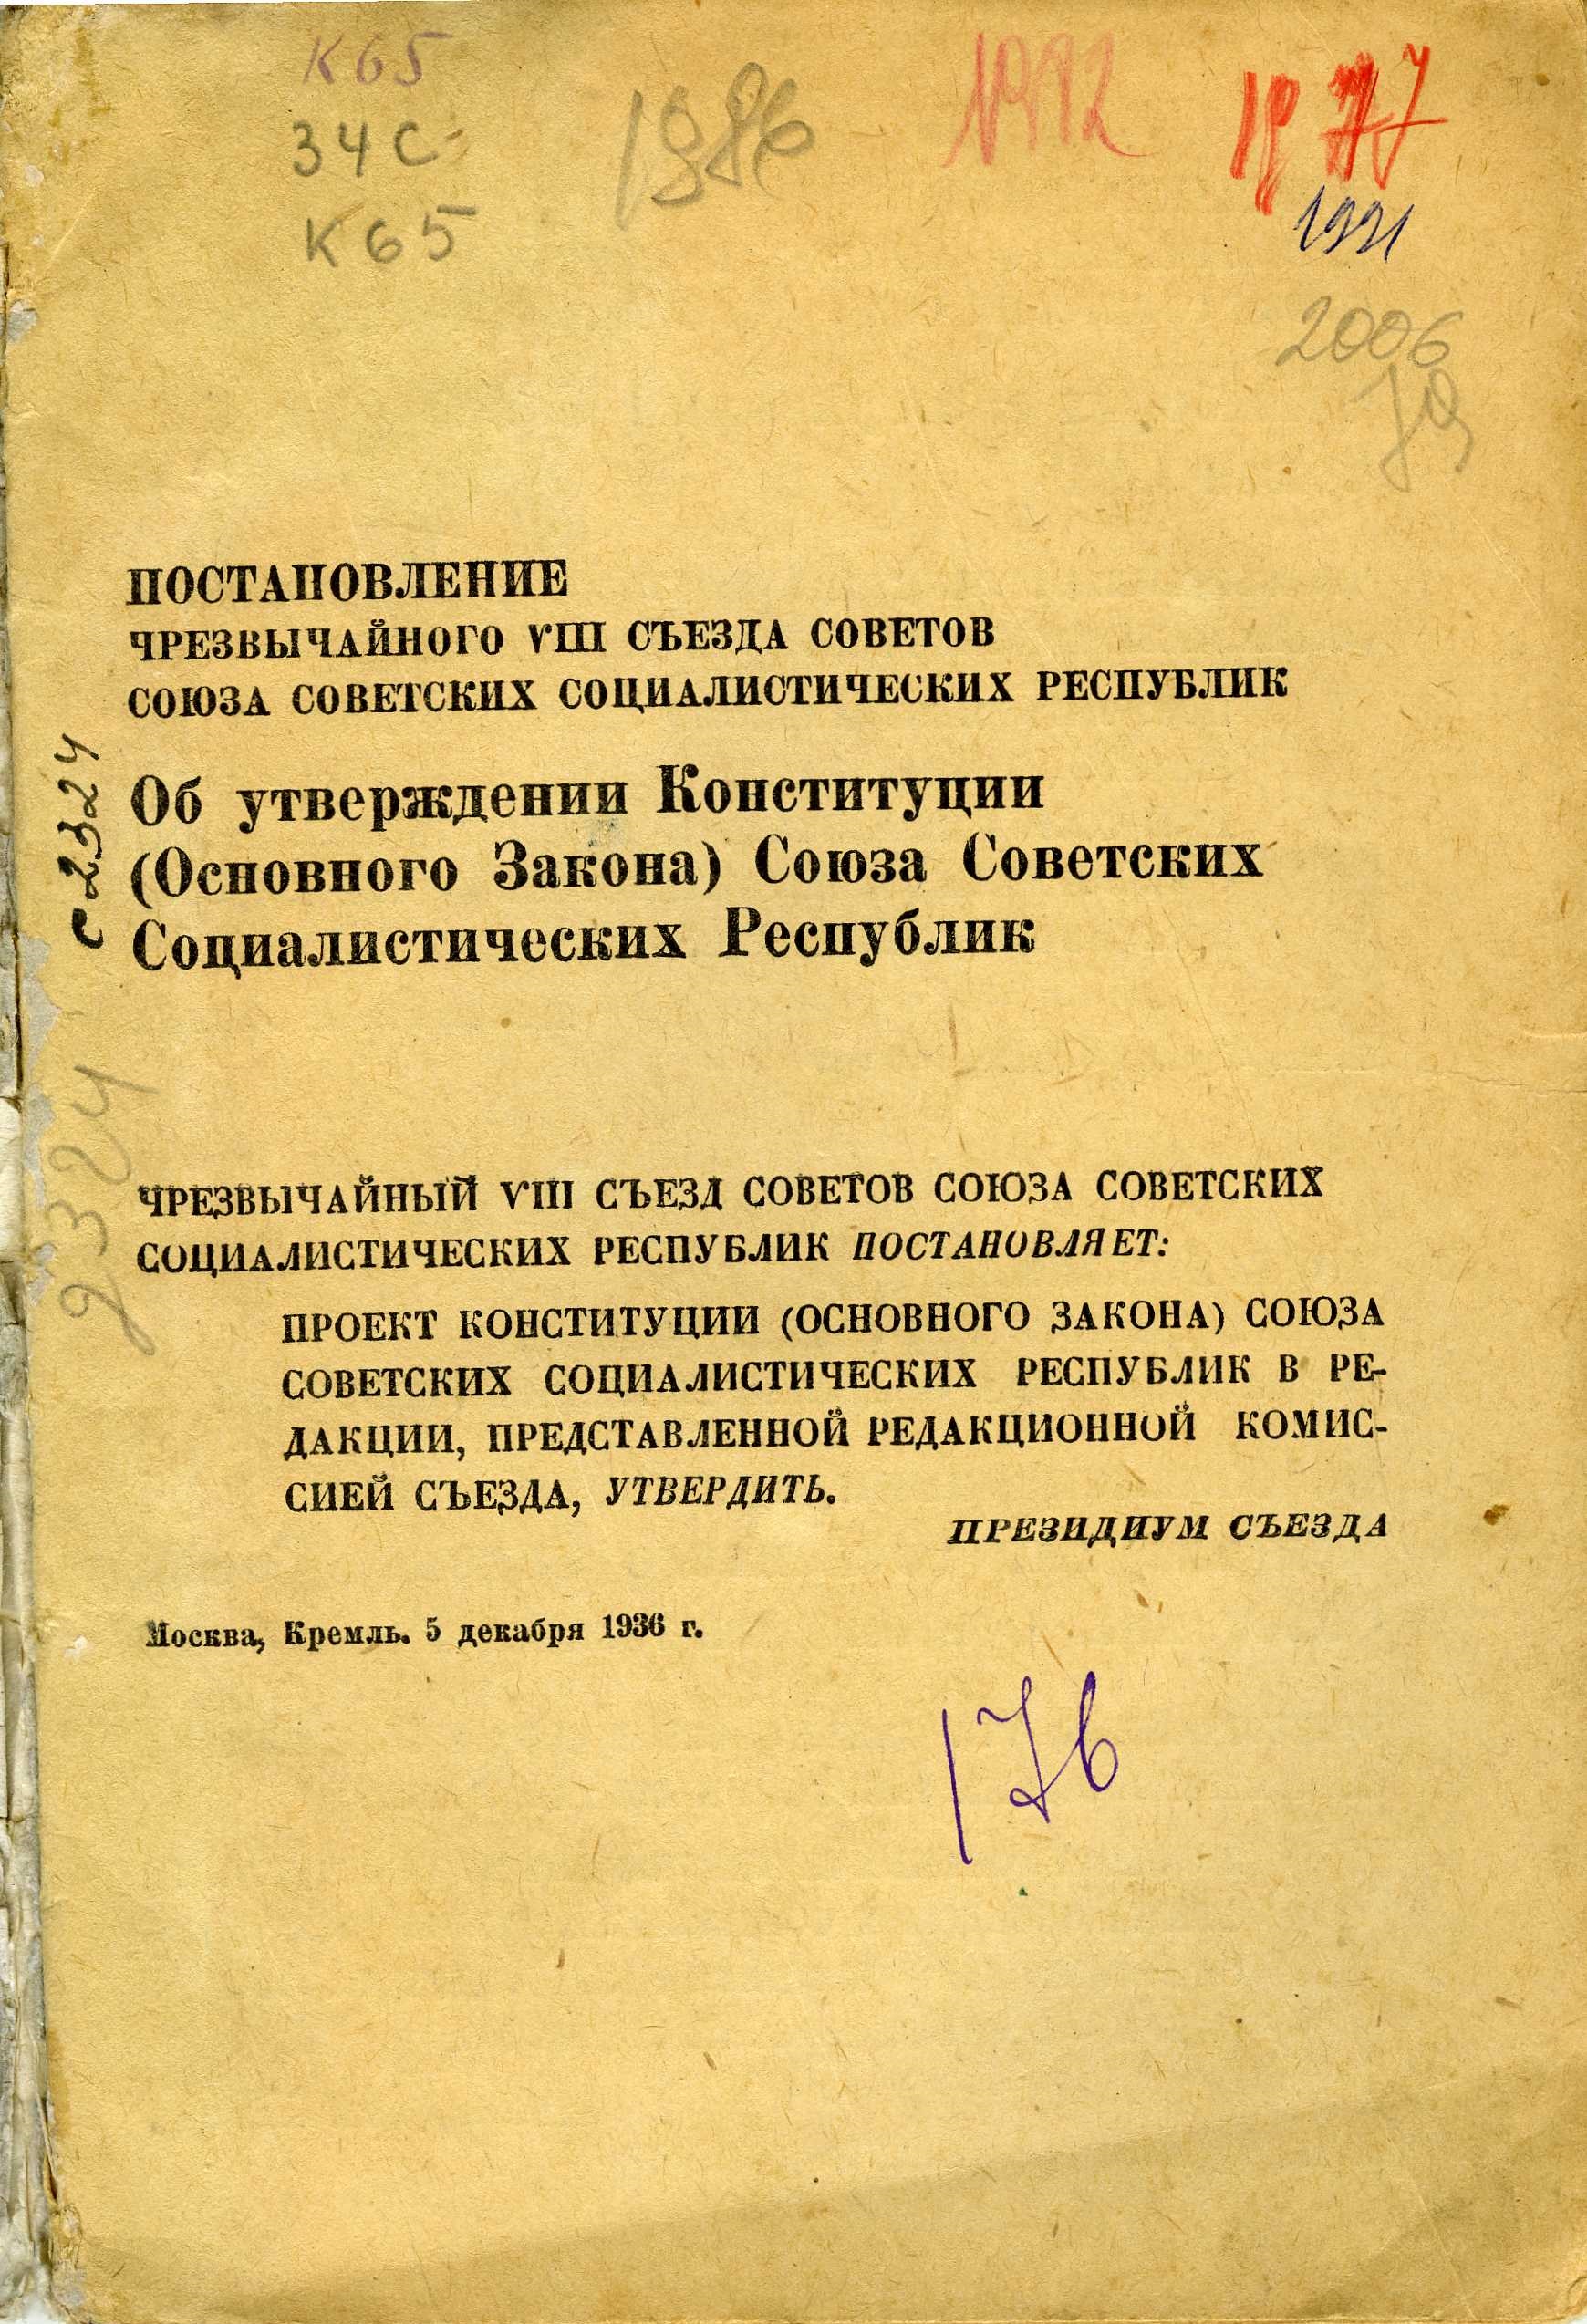 НСБ ГАТО. Конституция СССР. М.: ПАРТИЗДАТ. 1936. С. 1